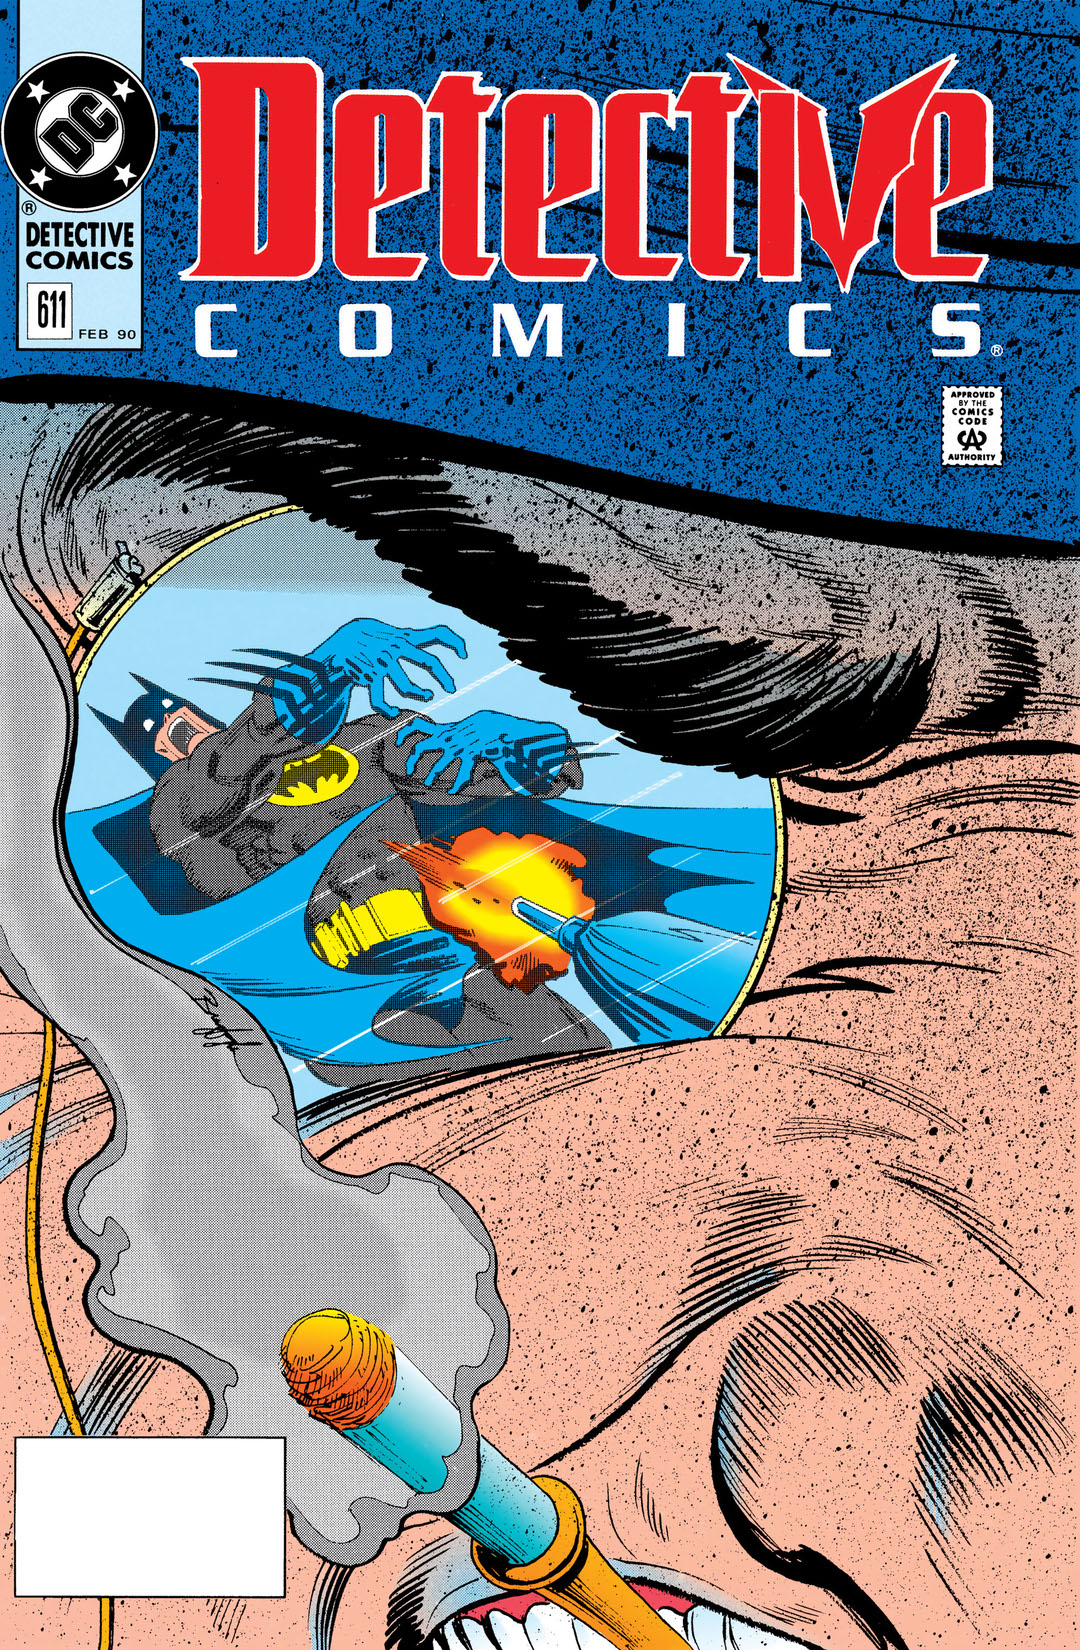 Detective Comics (1937-) #611 preview images